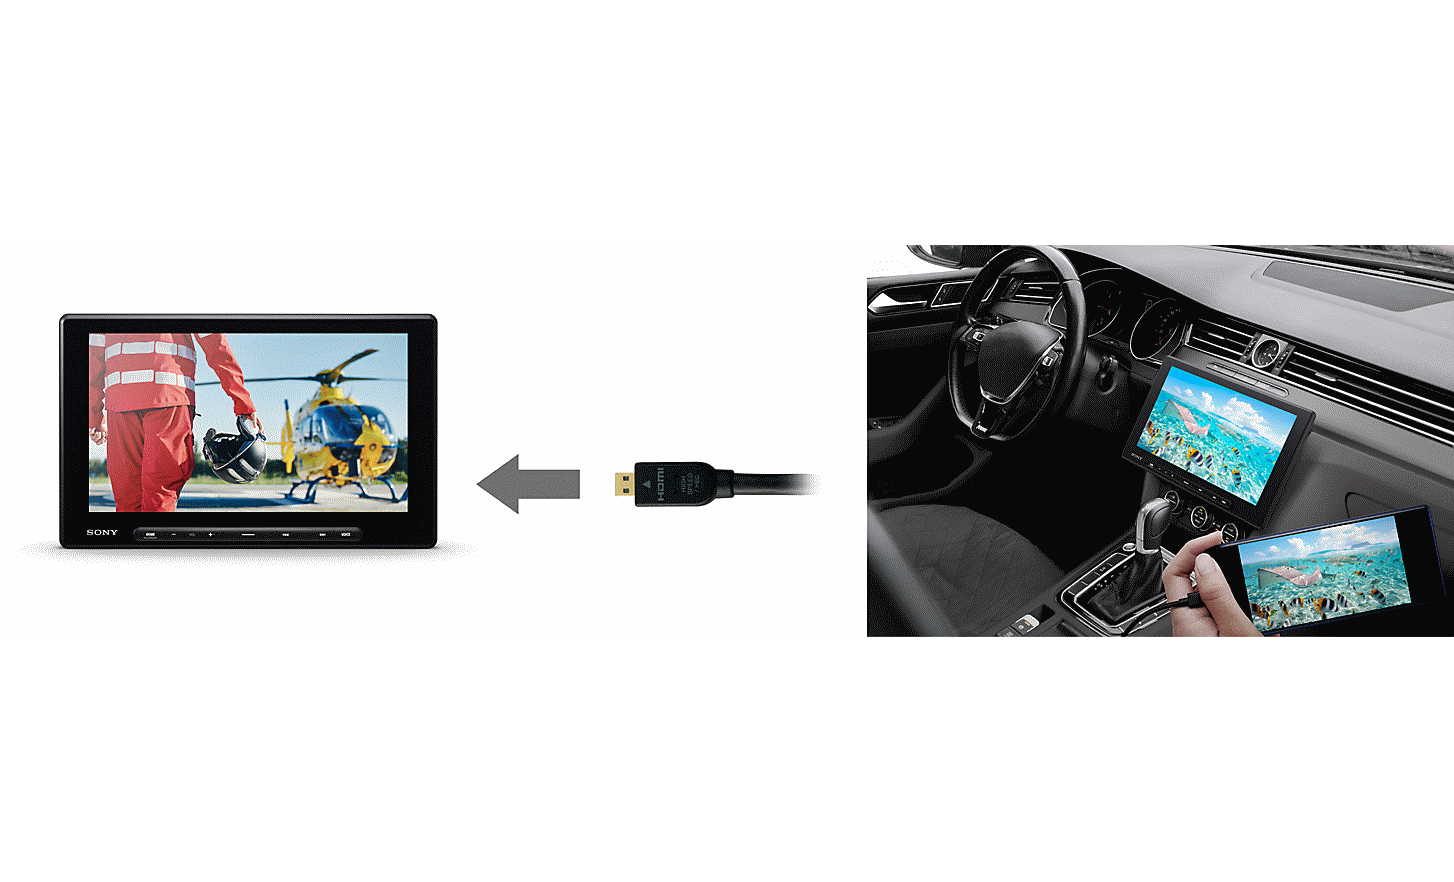 XAV-AX8500 ในแผงหน้าปัดรถยนต์ซึ่งมีโทรศัพท์เชื่อมต่ออยู่และภาพสาย HDMI ซึ่งมีลูกศรชี้ไปยัง XAV-AX8500 อีกเครื่องหนึ่ง